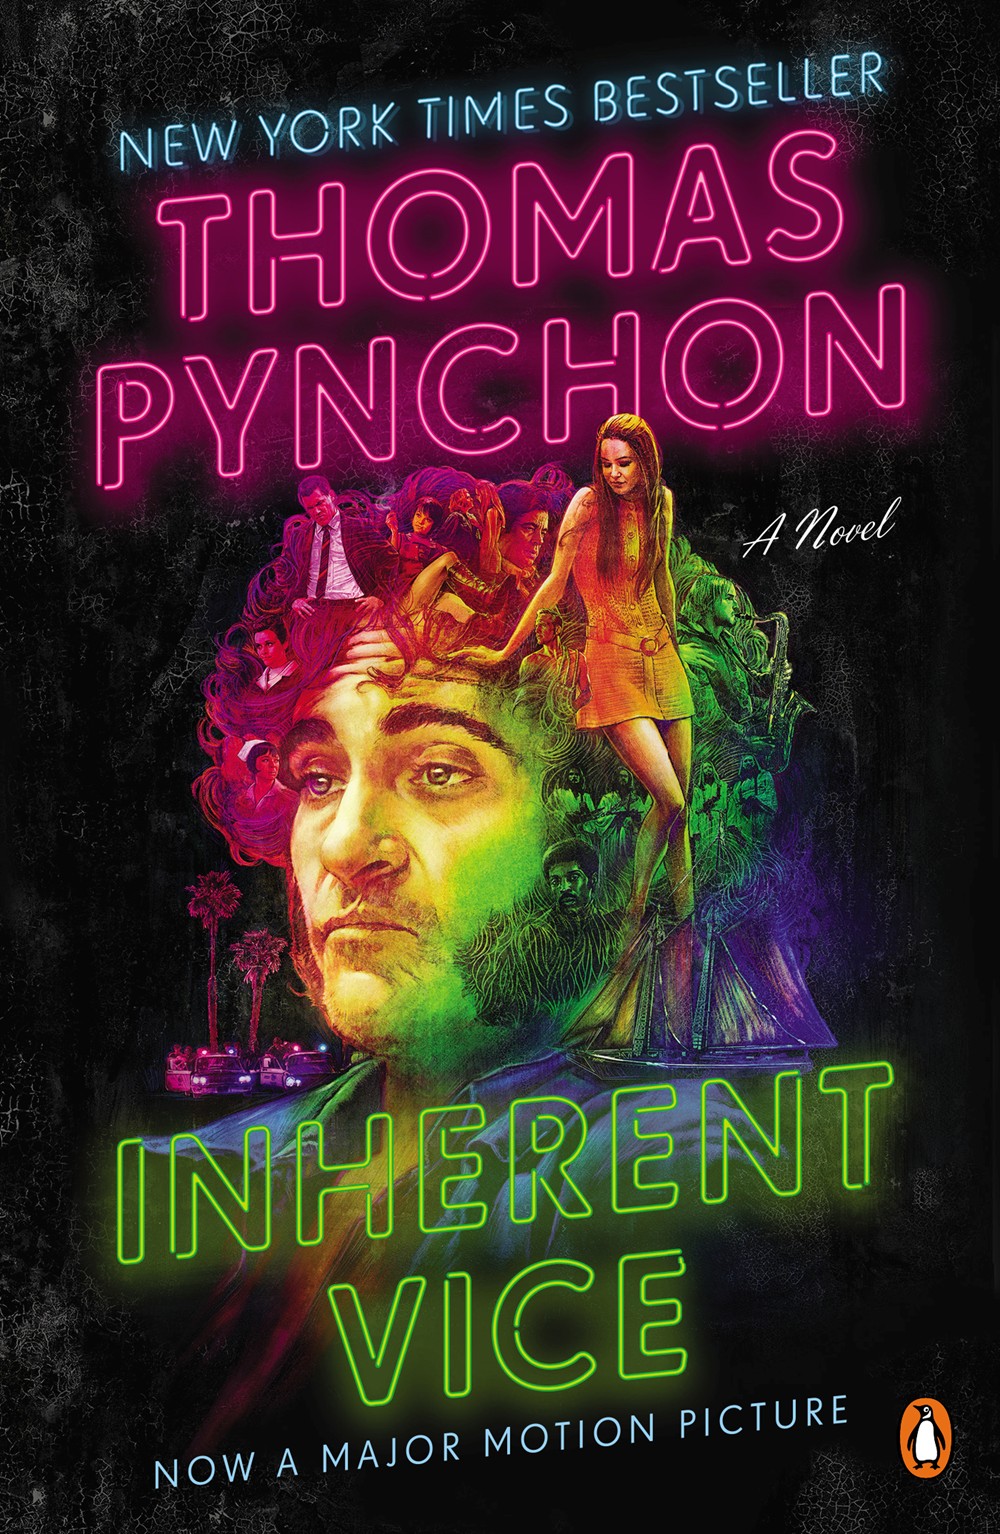 Pynchon, Thomas, INHERENT VICE, (Penguin Press, 2009)